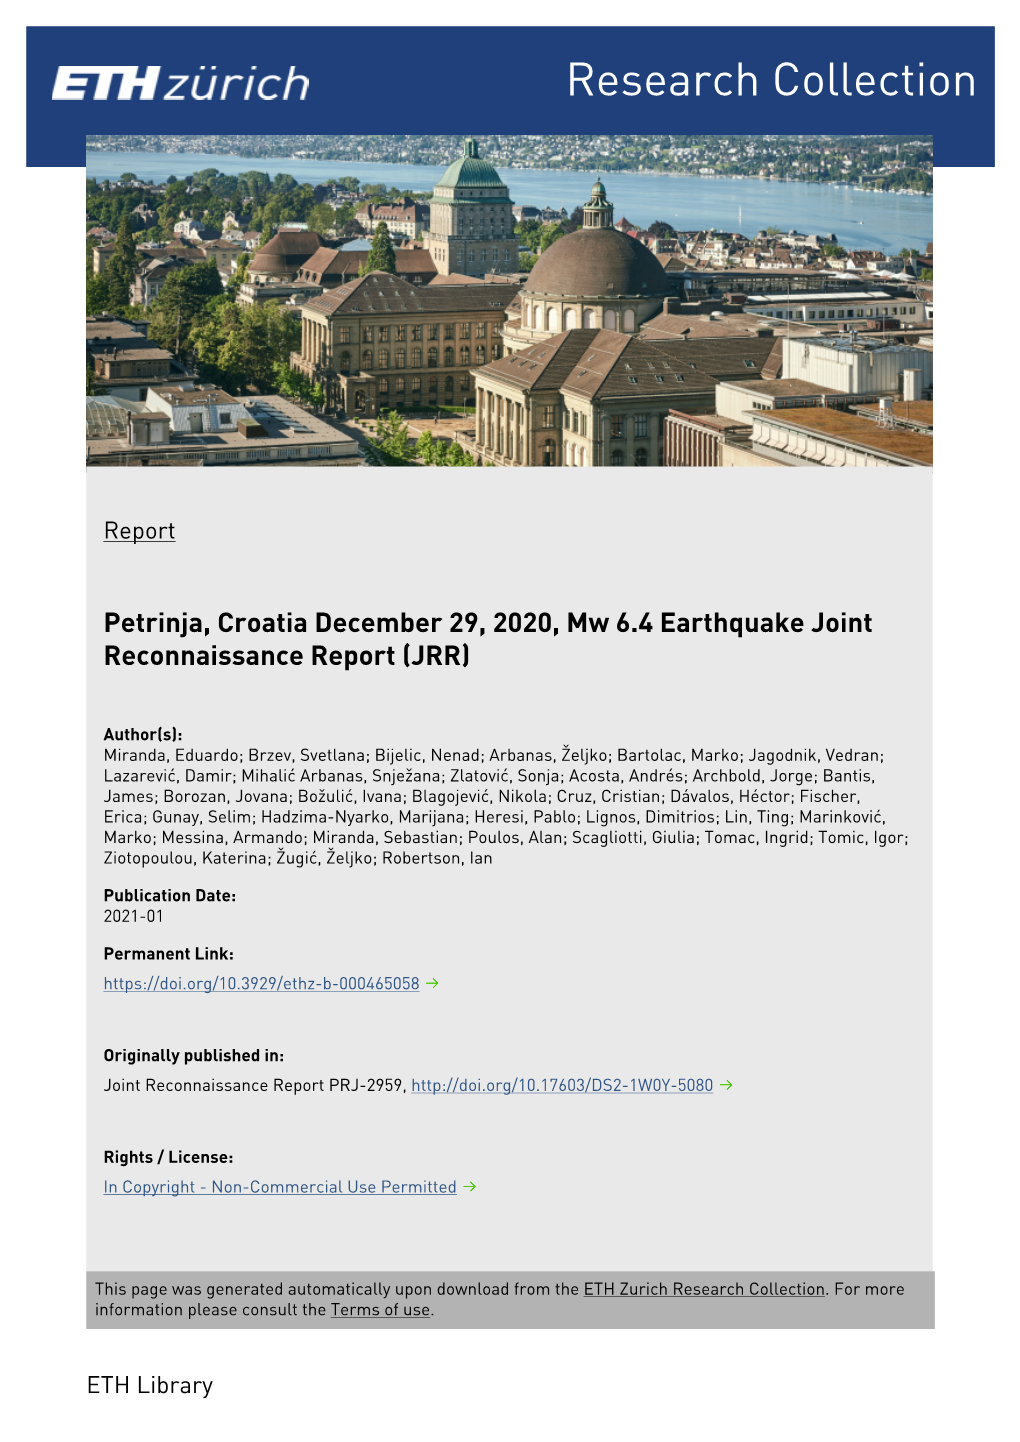 Petrinja, Croatia December 29, 2020, Mw 6.4 Earthquake Joint Reconnaissance Report (JRR)